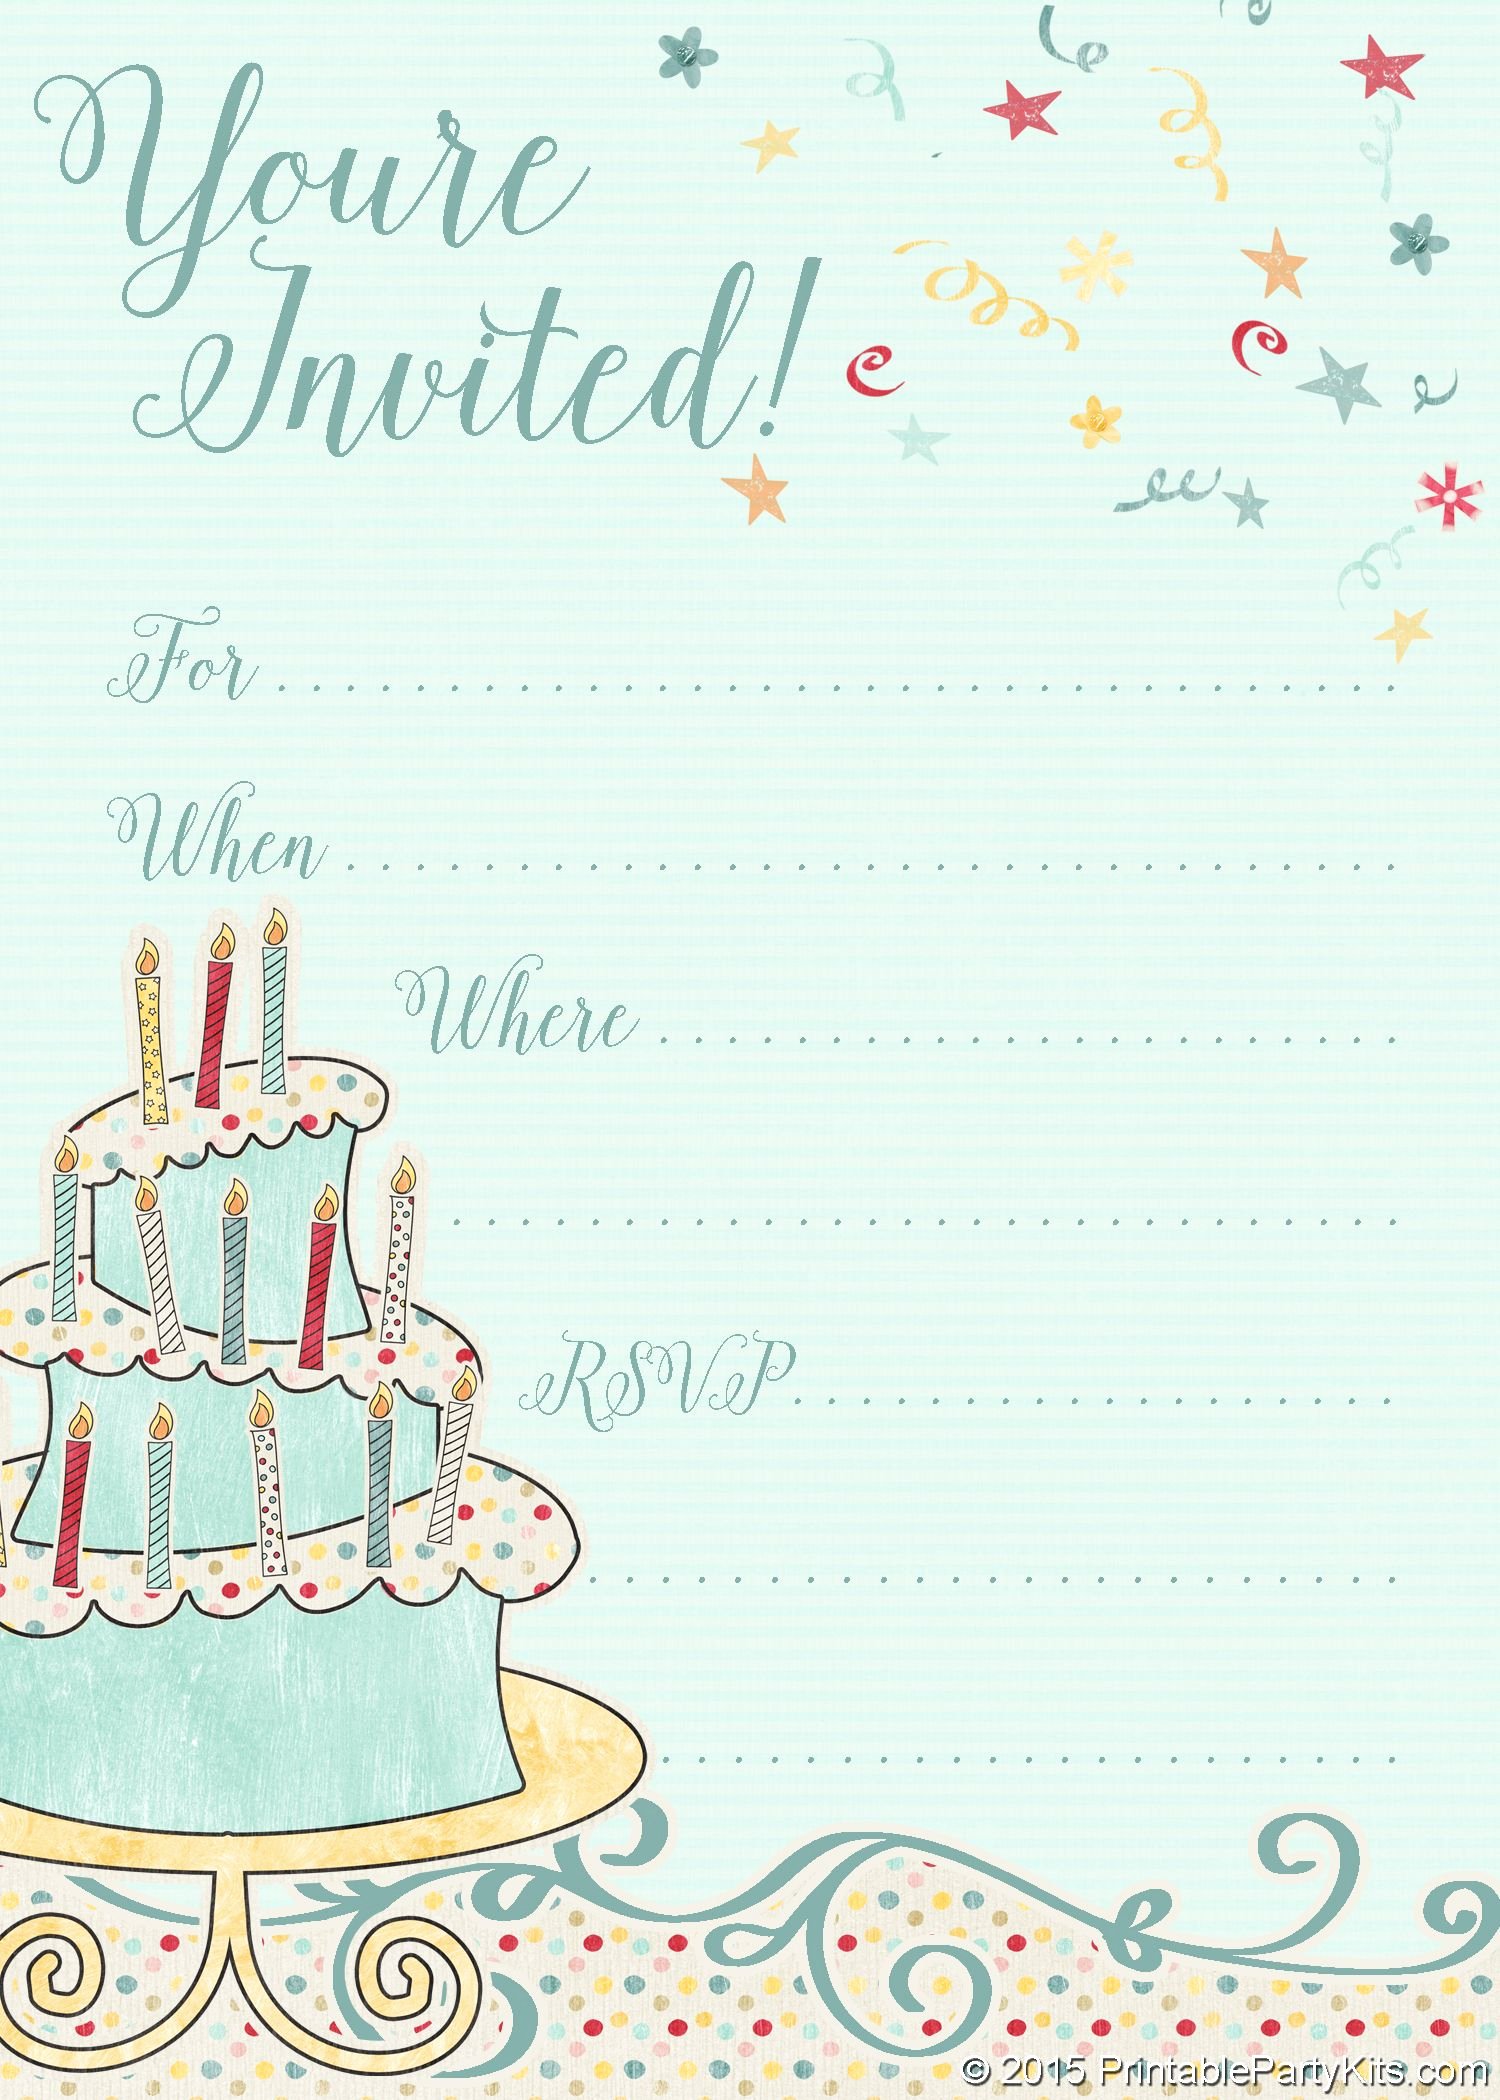 Free Birthday Party Invitation Templates Elegant Free Printable Whimsical Birthday Party Invitation